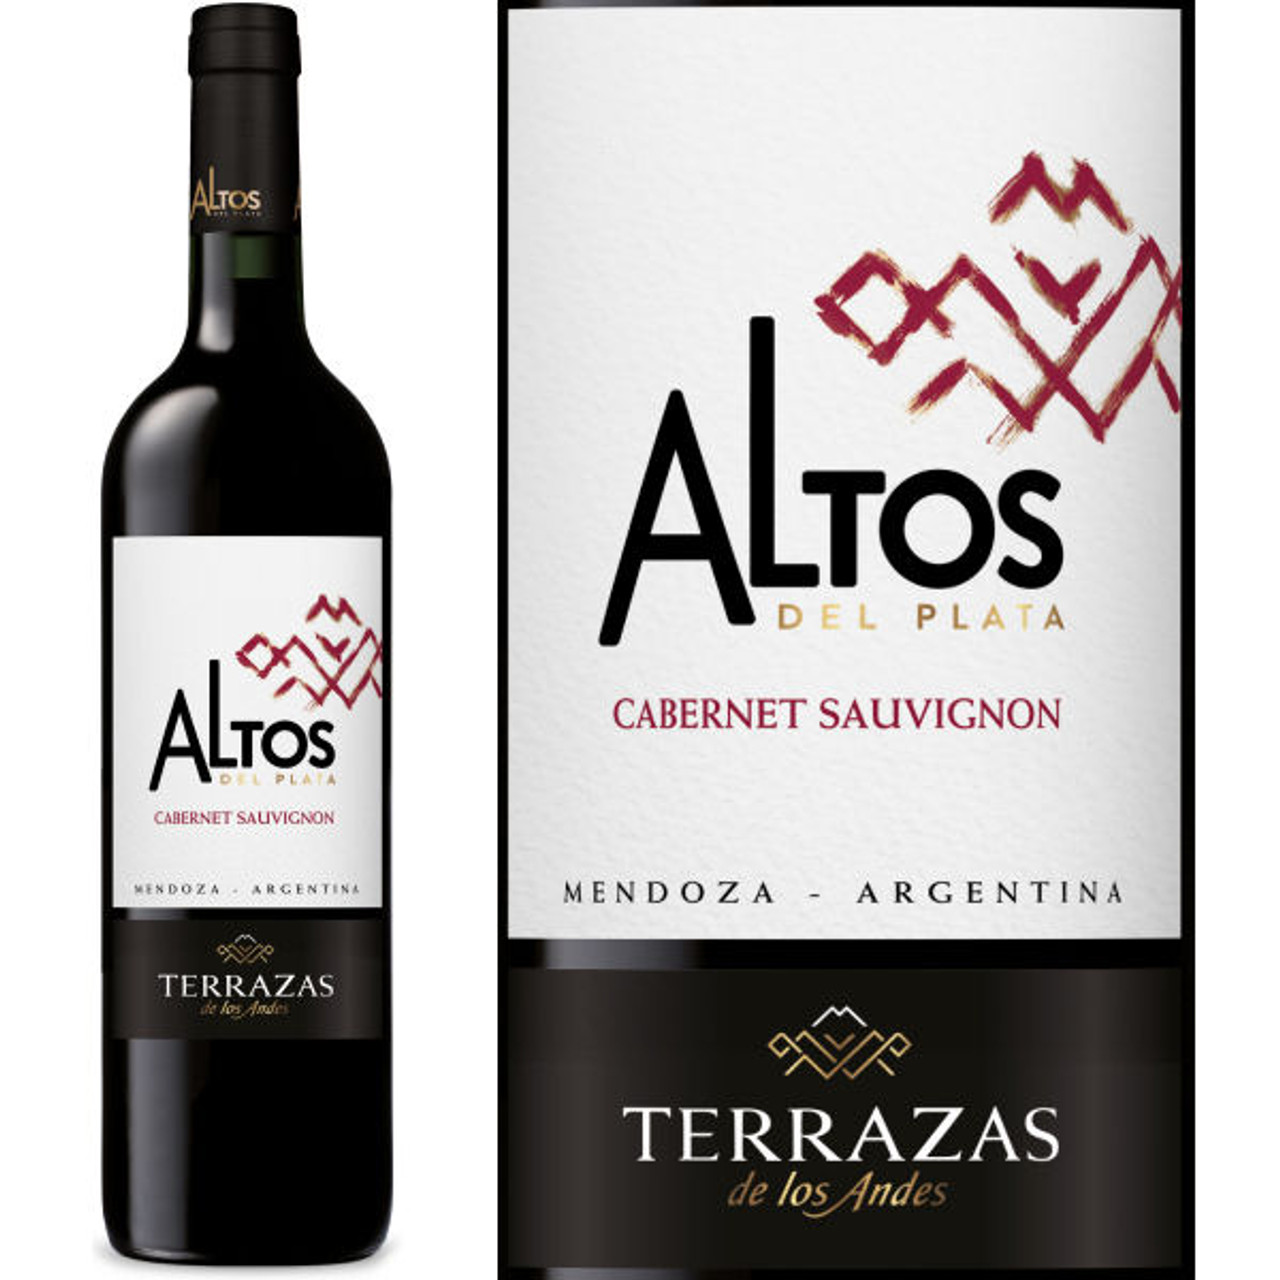 12 Bottle Case Terrazas De Los Andes Altos Del Plata Cabernet 2018 W Free Shipping